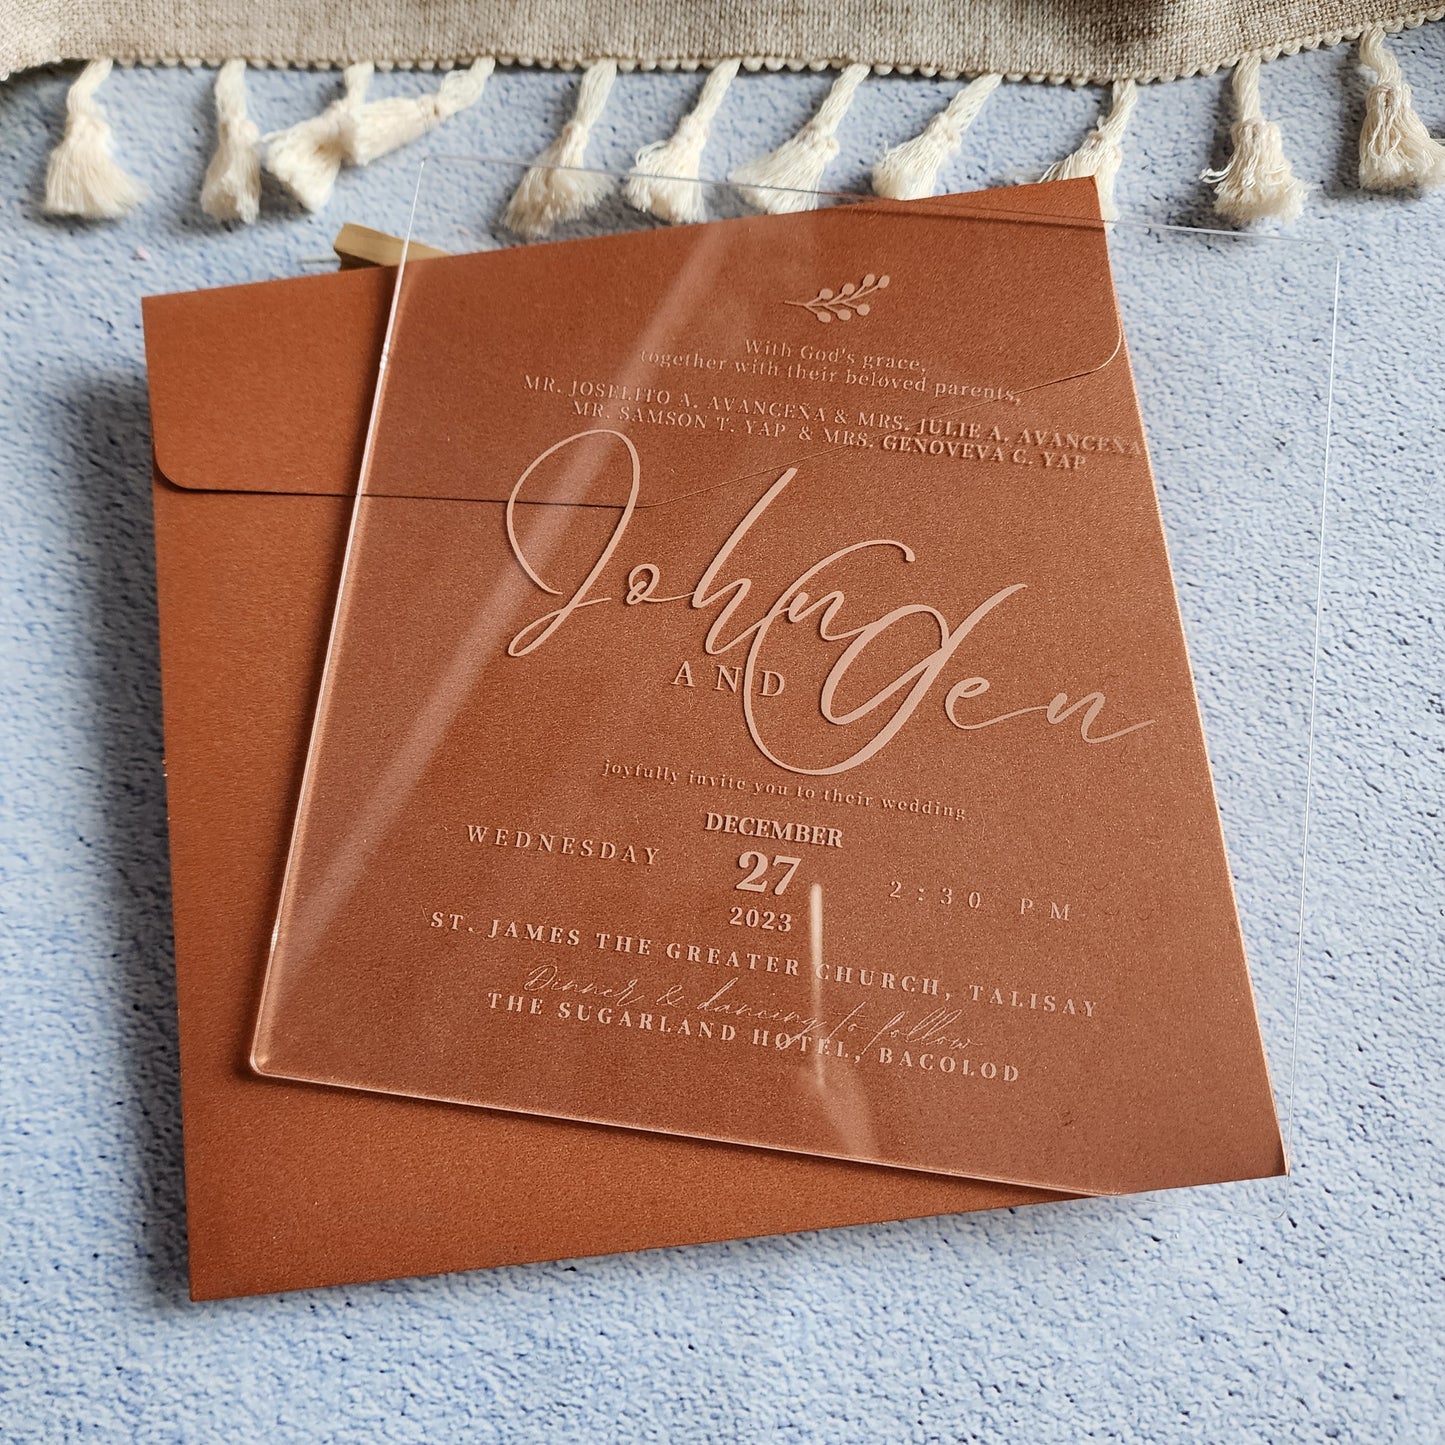 Clear acrylic wedding invitation card